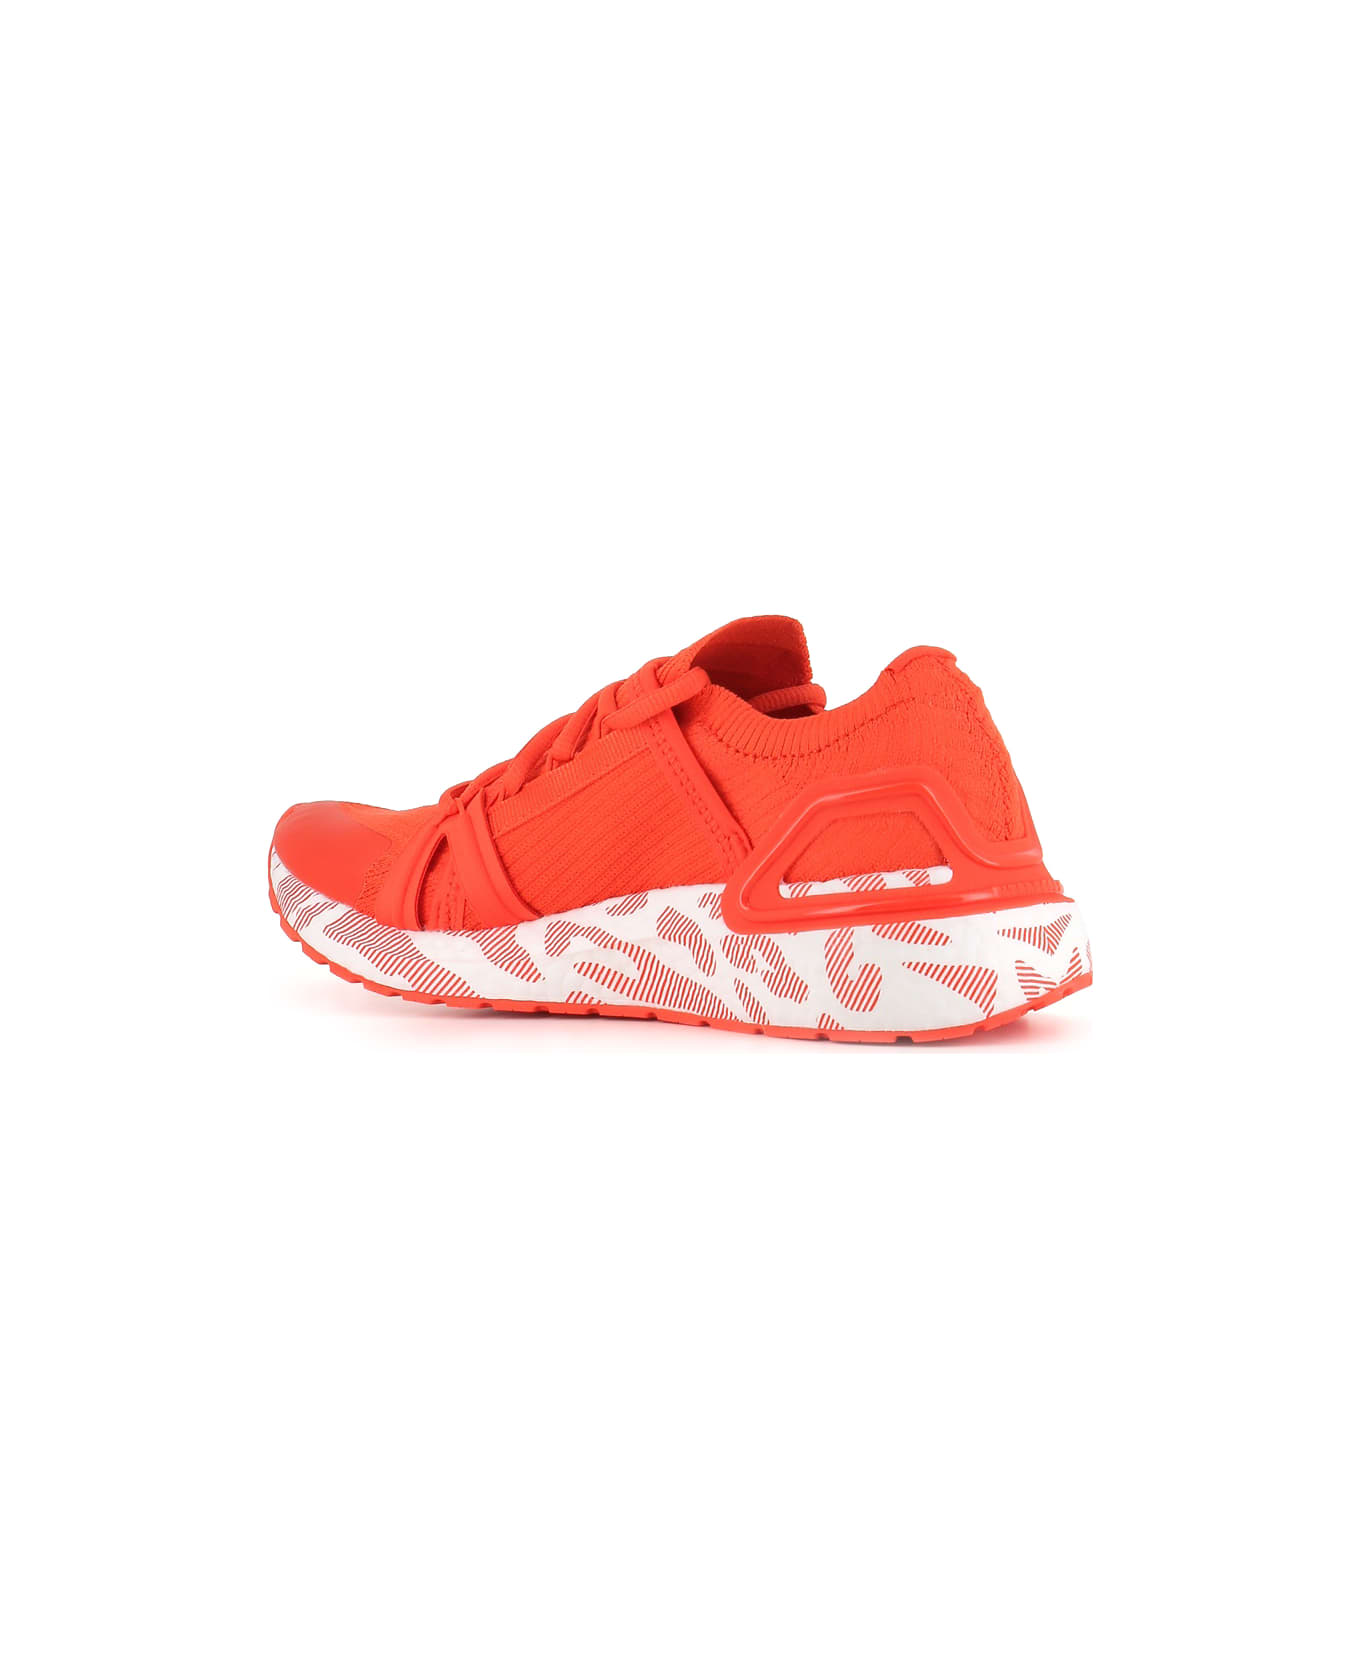 Adidas by Stella McCartney Sneakers Asmc Ultraboost 20 - Arancio fluo